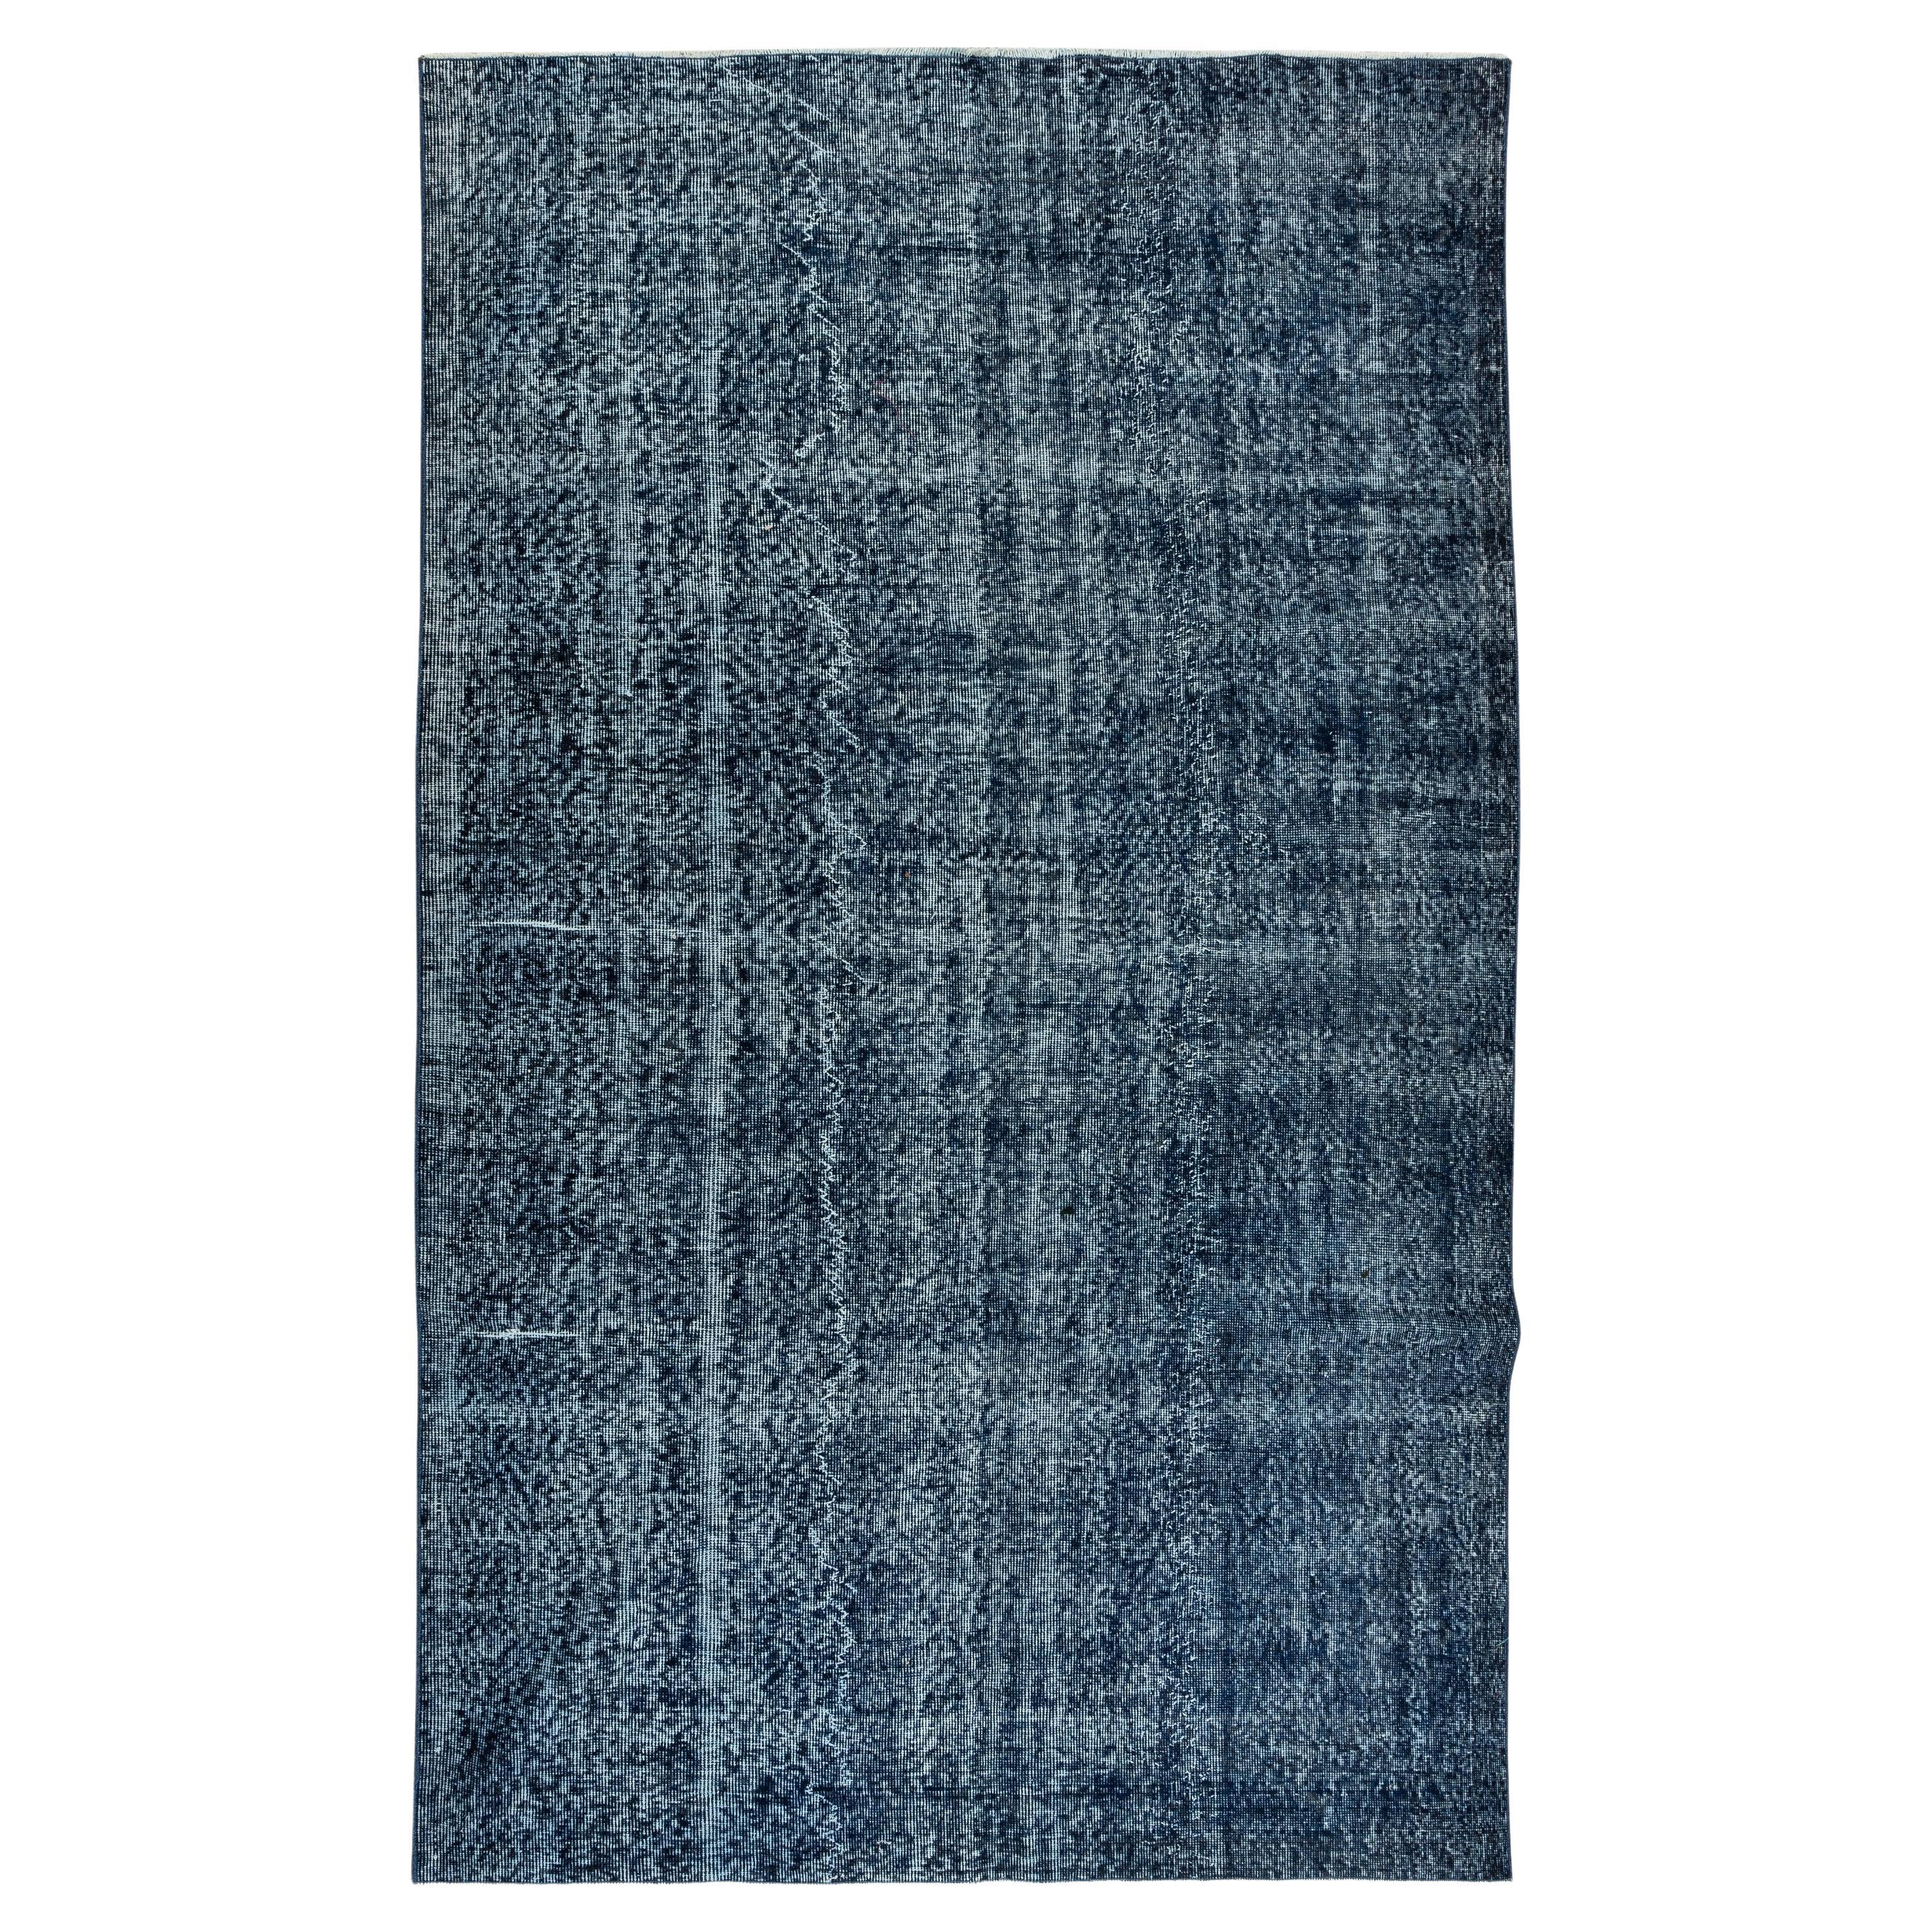 5.6x9.2 Ft Modern Navy Blue Area Rug, Vintage Handmade Turkish Wool Carpet